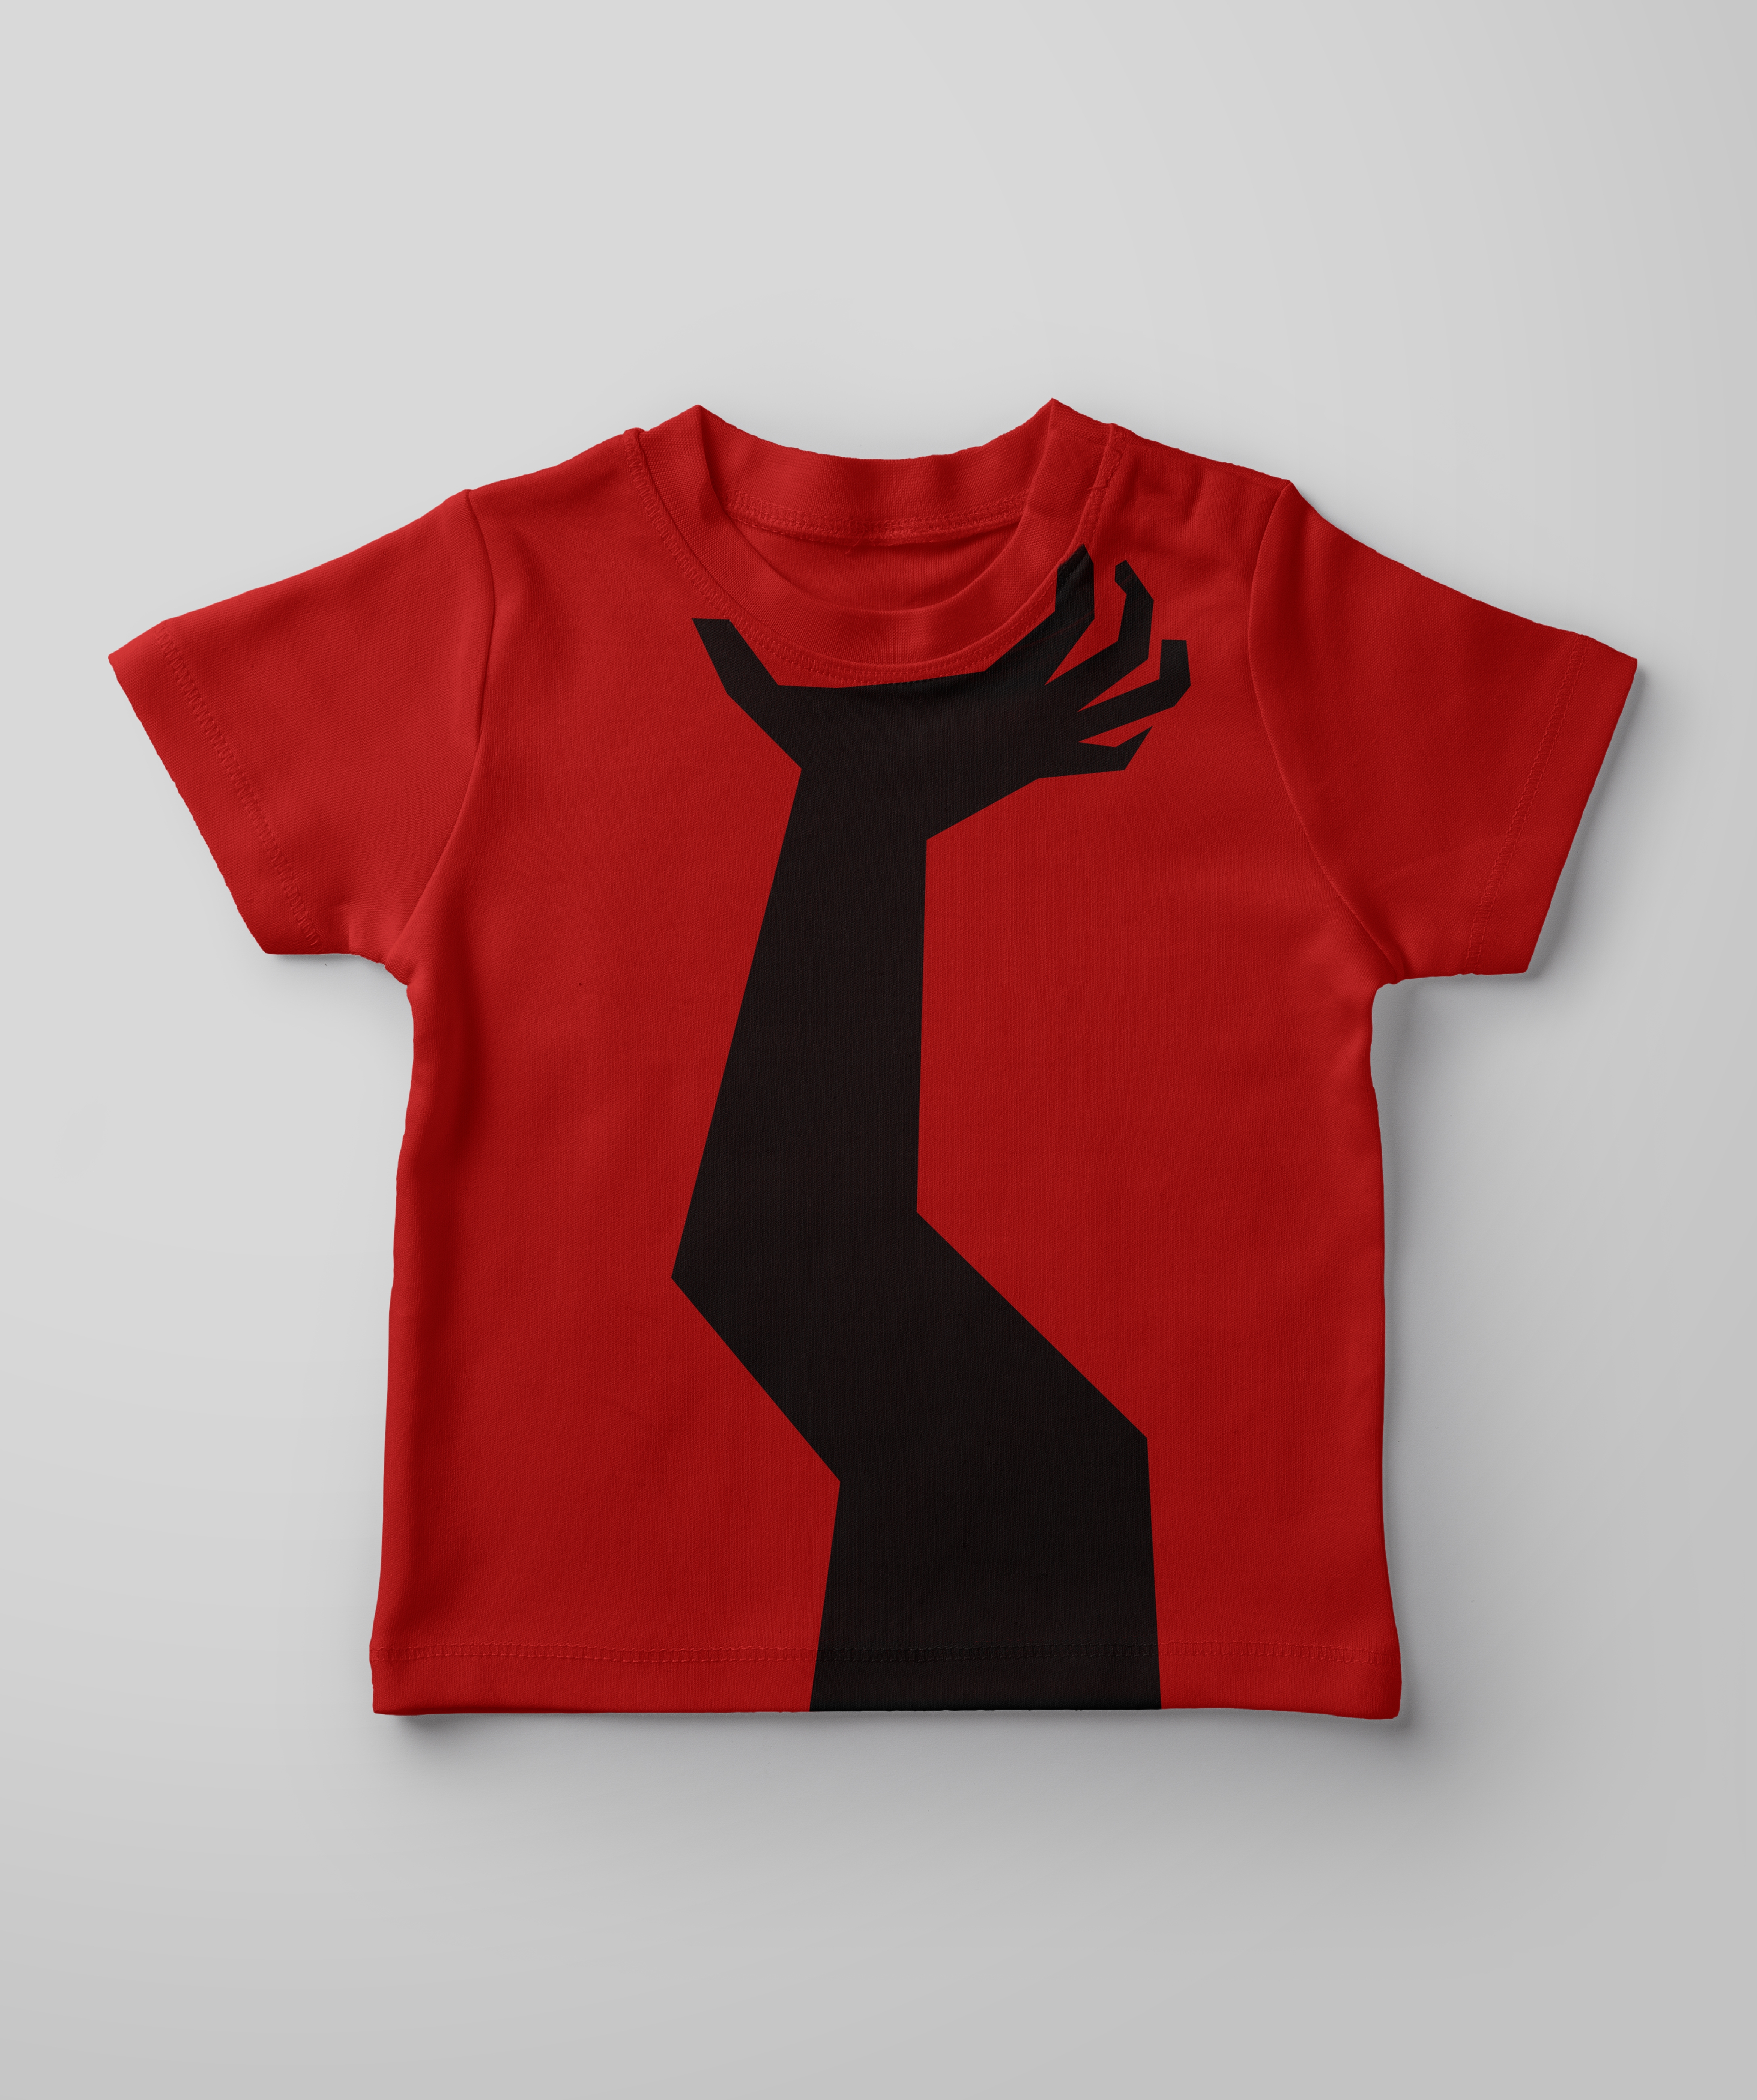 UrGear | UrGear Kids Red Hand Printed Cotton T-Shirt